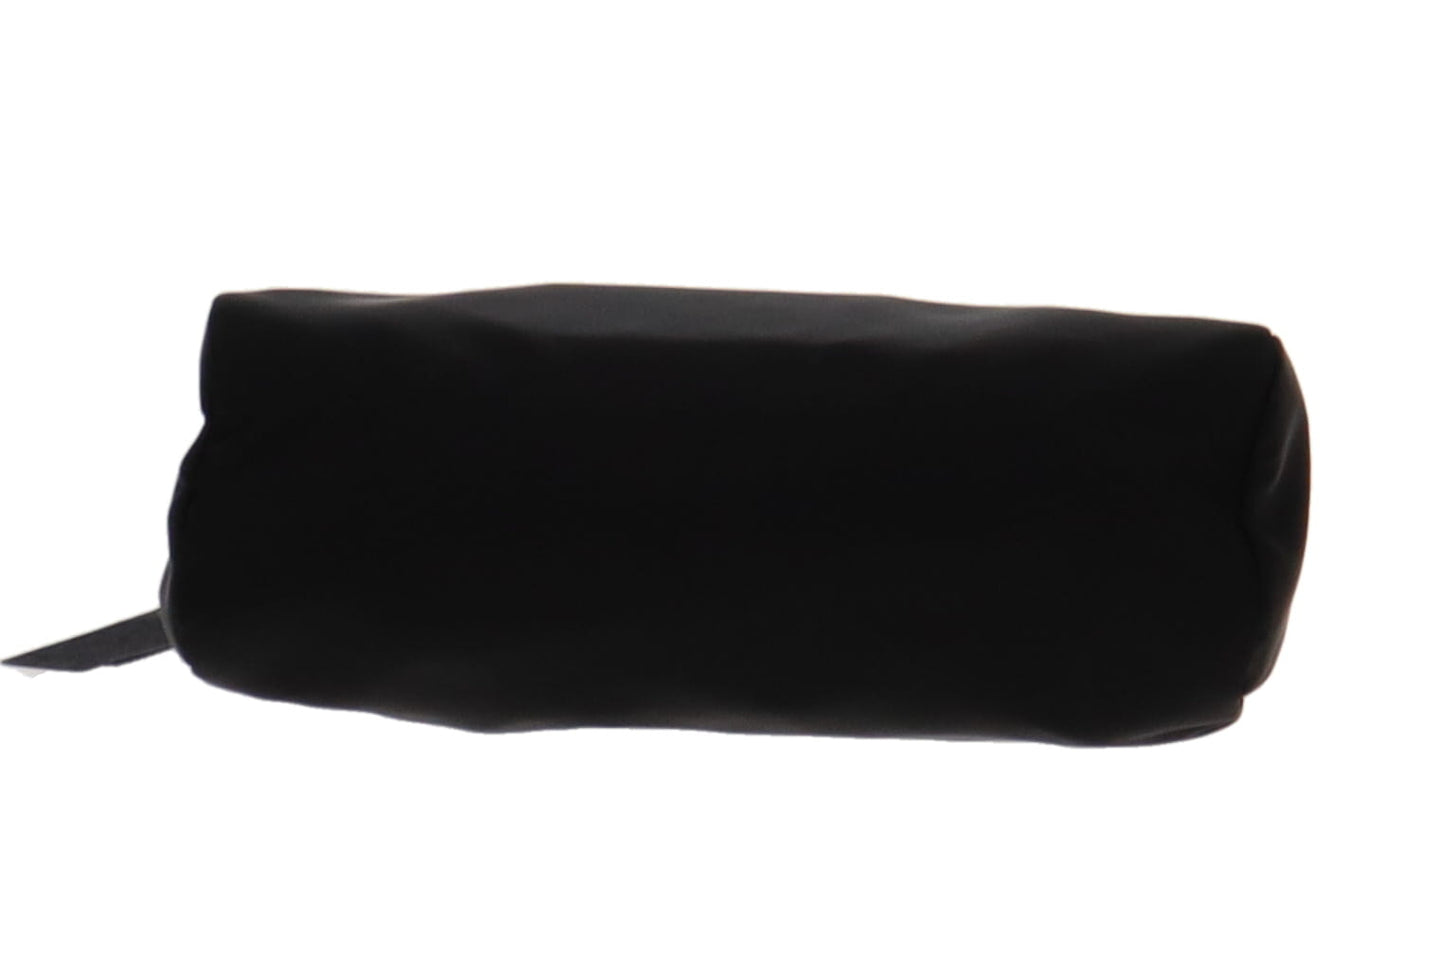 Prada Black Nylon Large Cosmetic Pouch